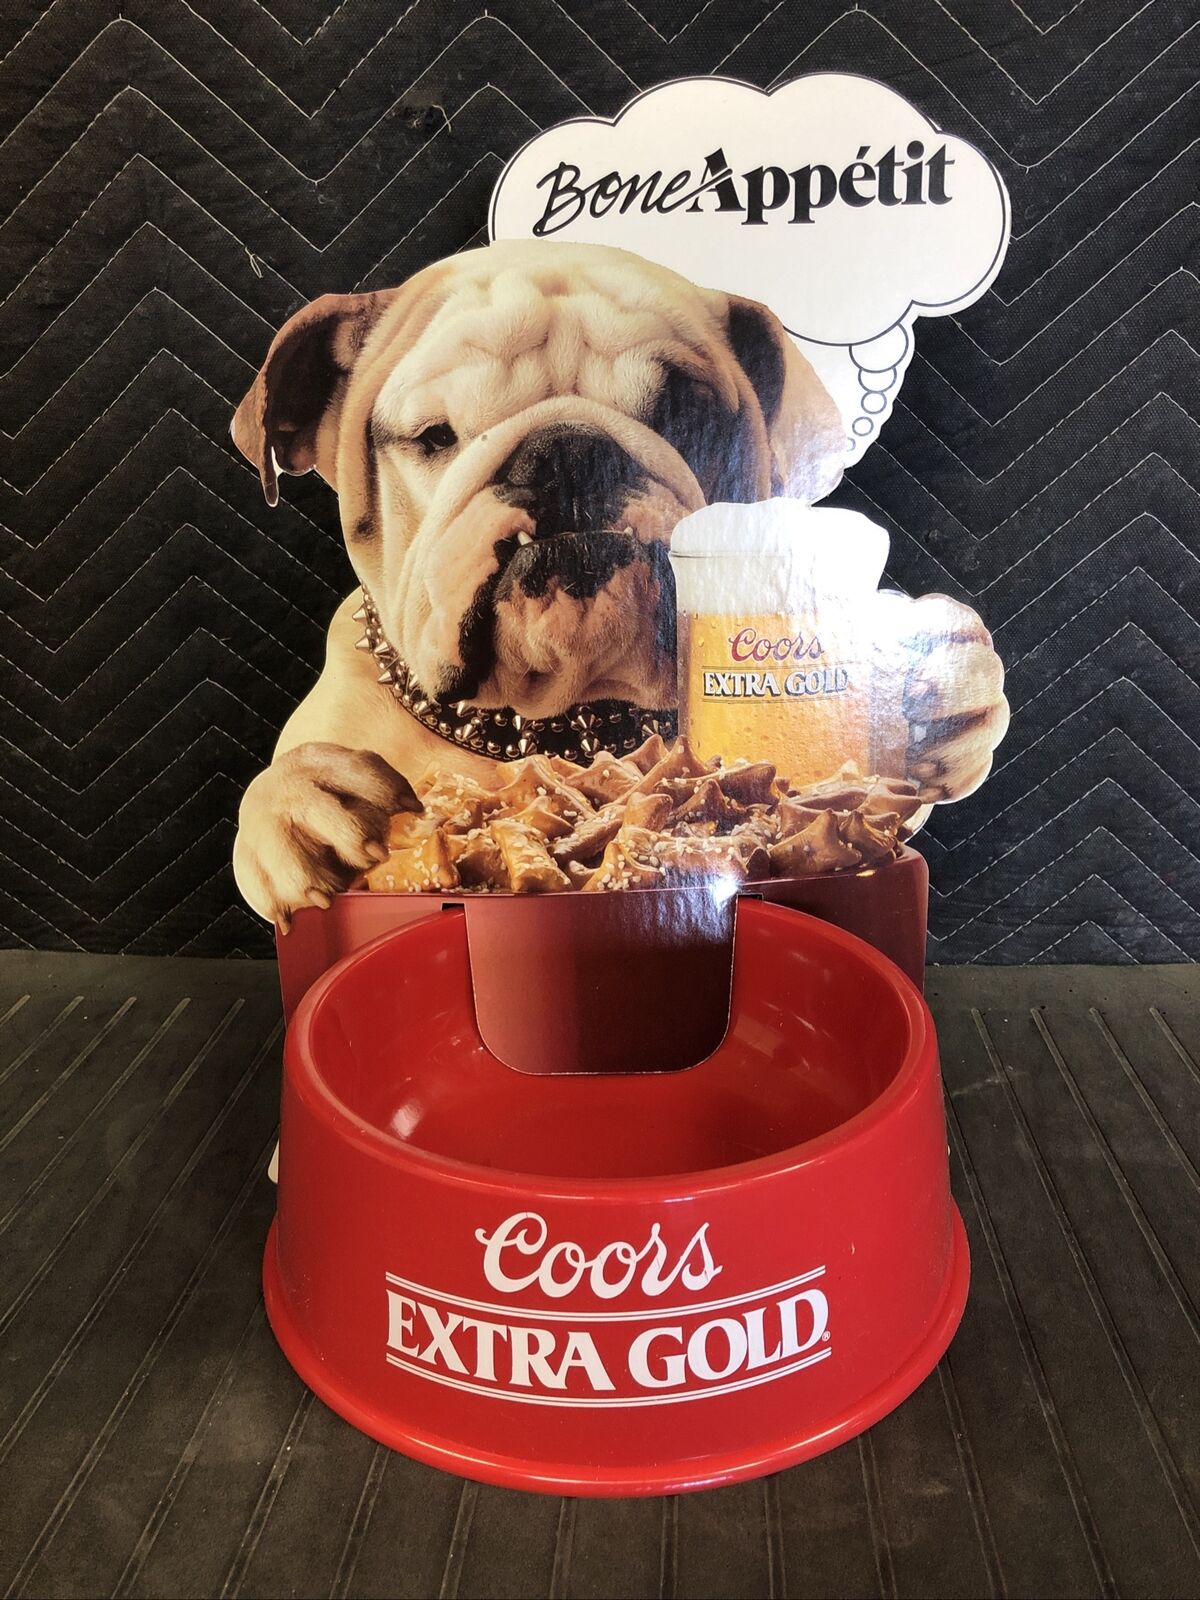 Coors Extra Gold Bar Display, Coors Extra Gold Bulldog Bone Appetit Pretzel Bowl